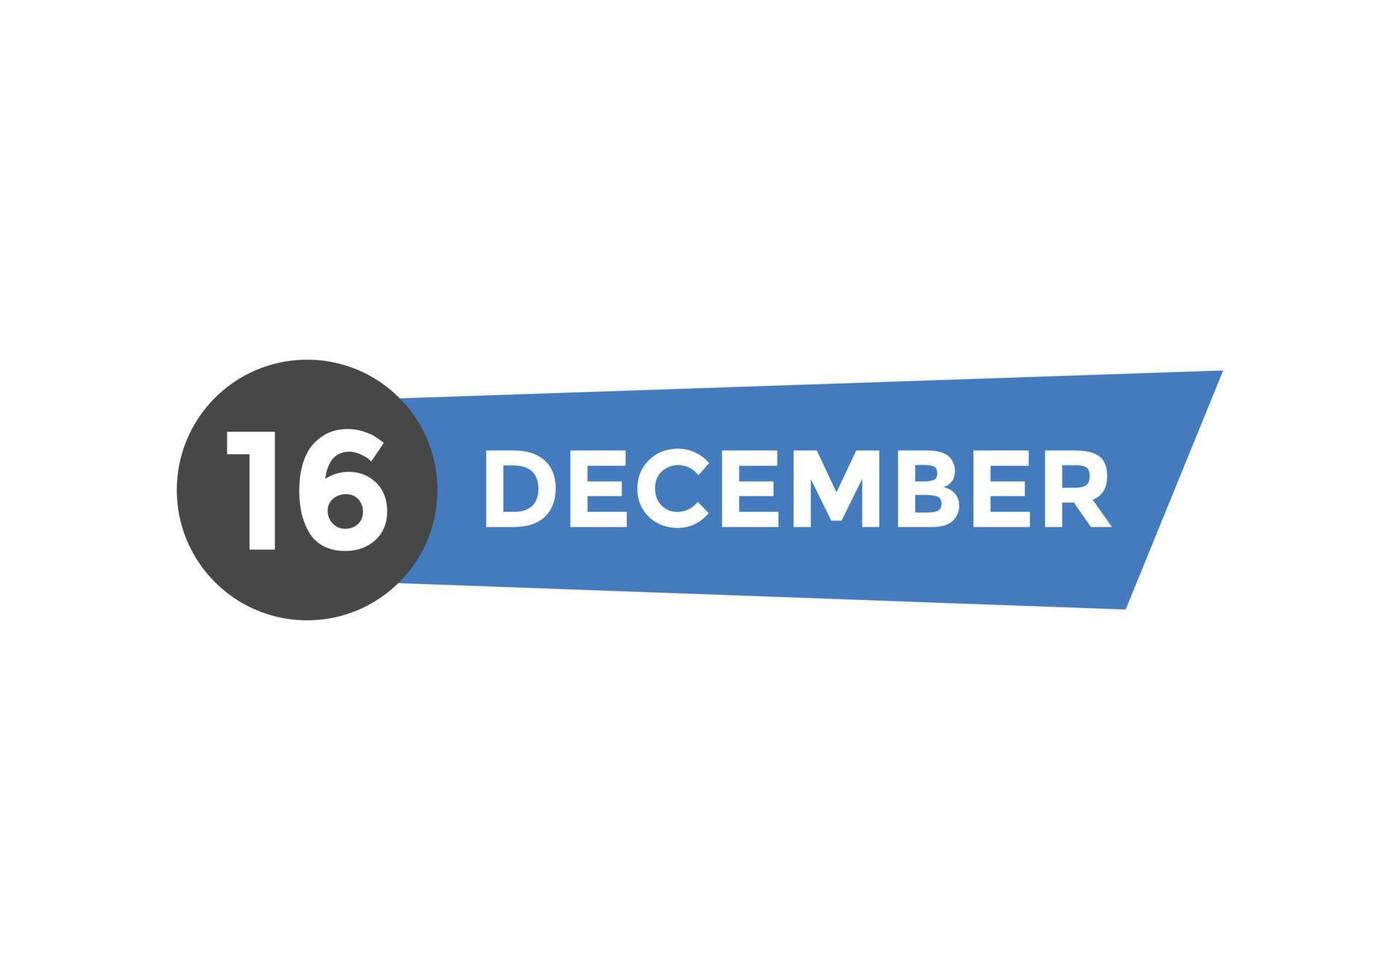 december 16 calendar reminder. 16th december daily calendar icon template. Calendar 16th december icon Design template. Vector illustration